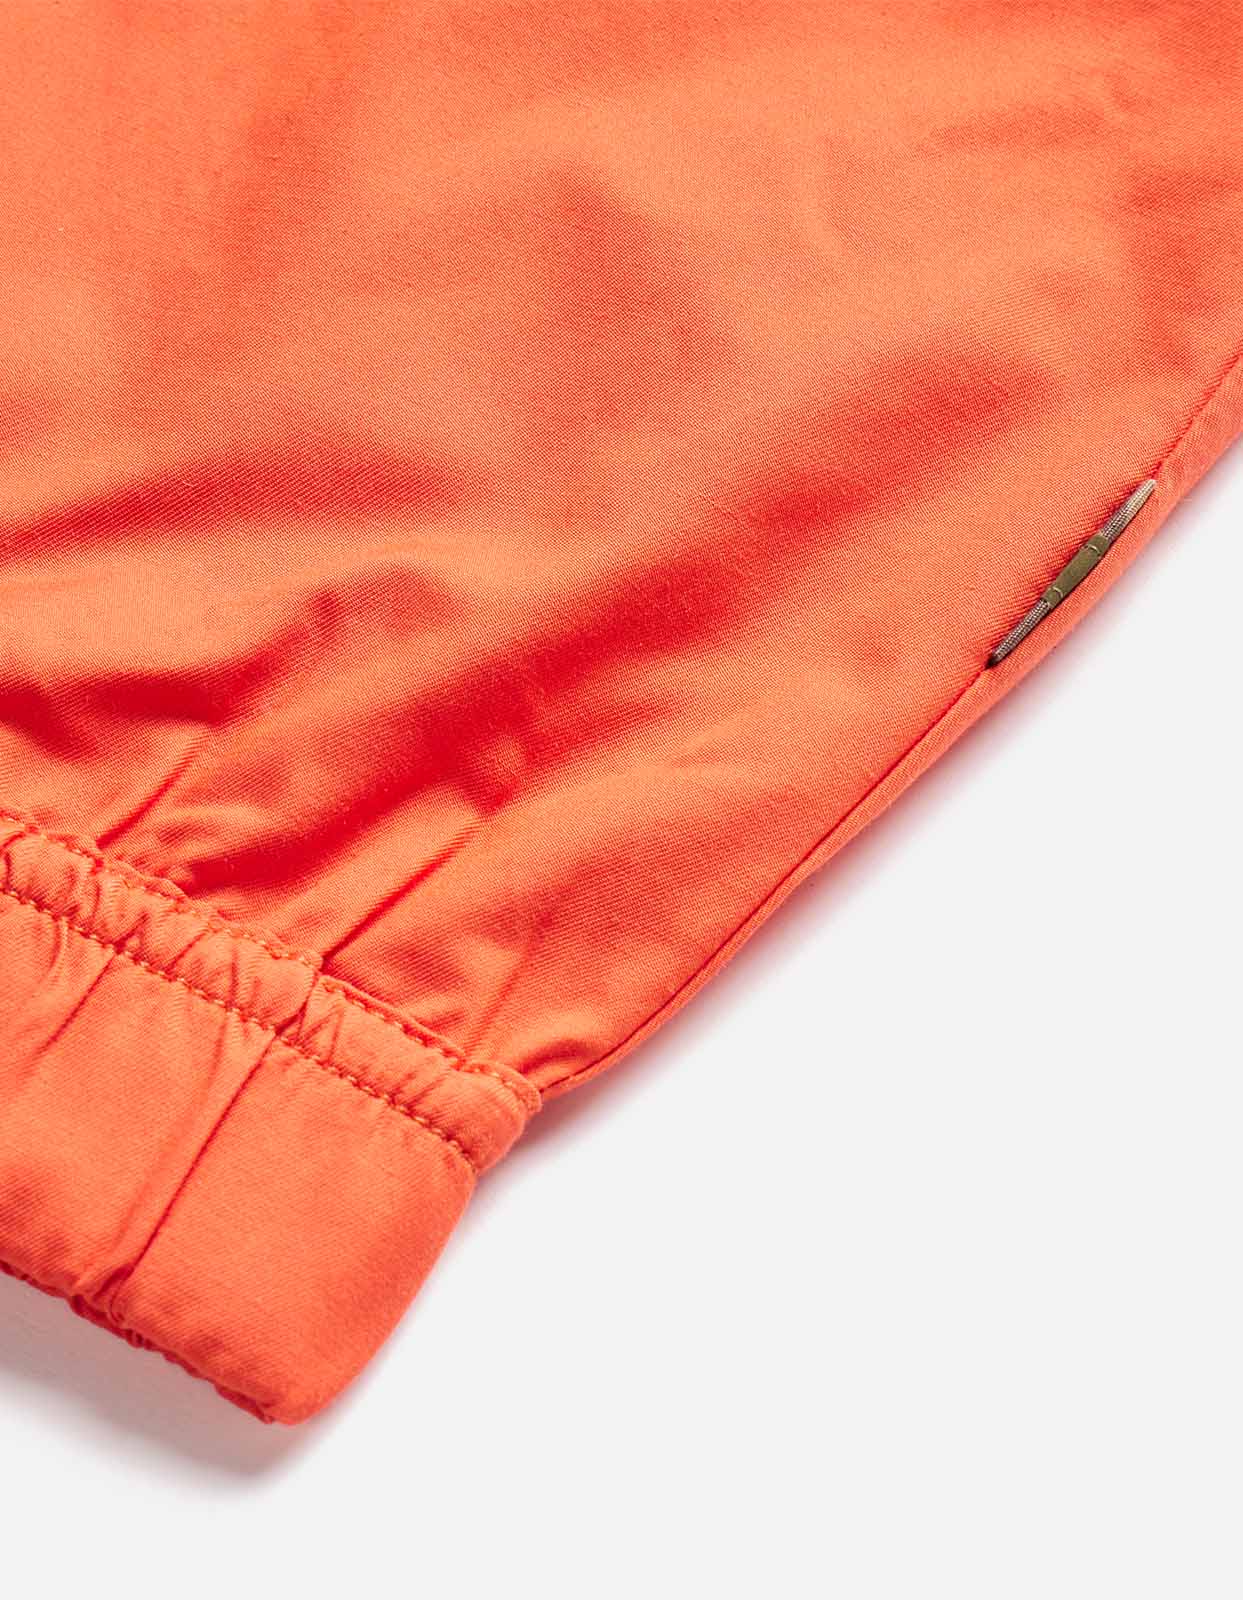 4050 Asym Track Pants Blaze Orange